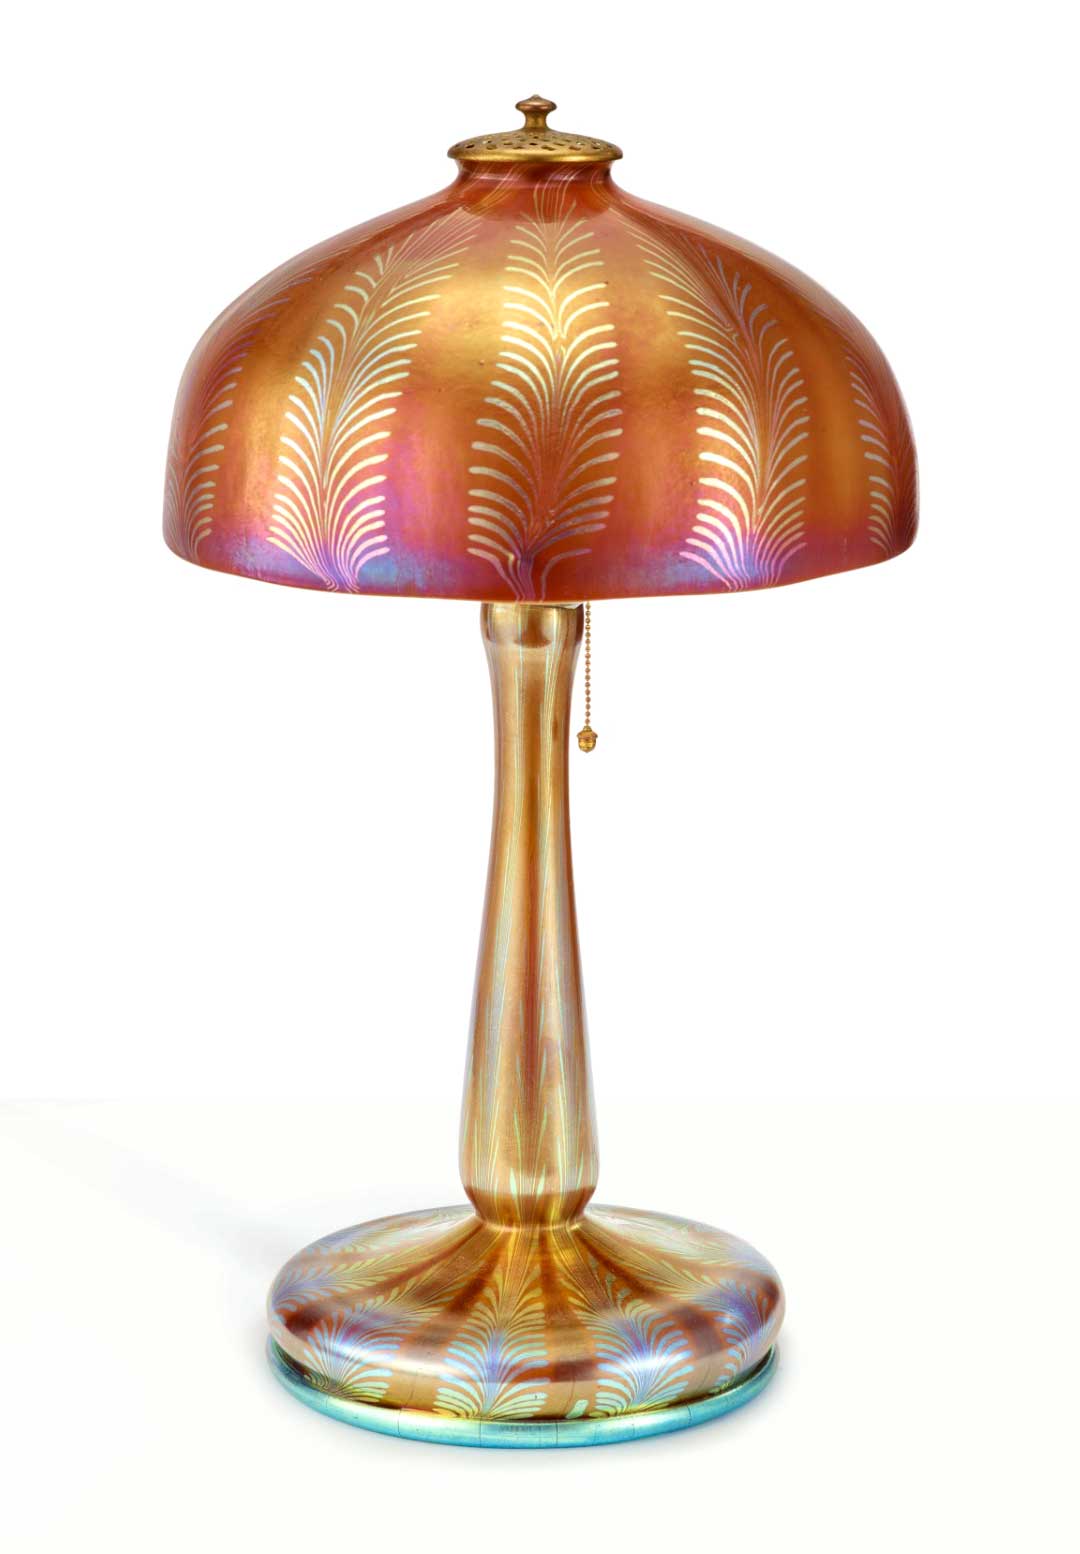 Tiffany Studios, 10" Favrile Lamp